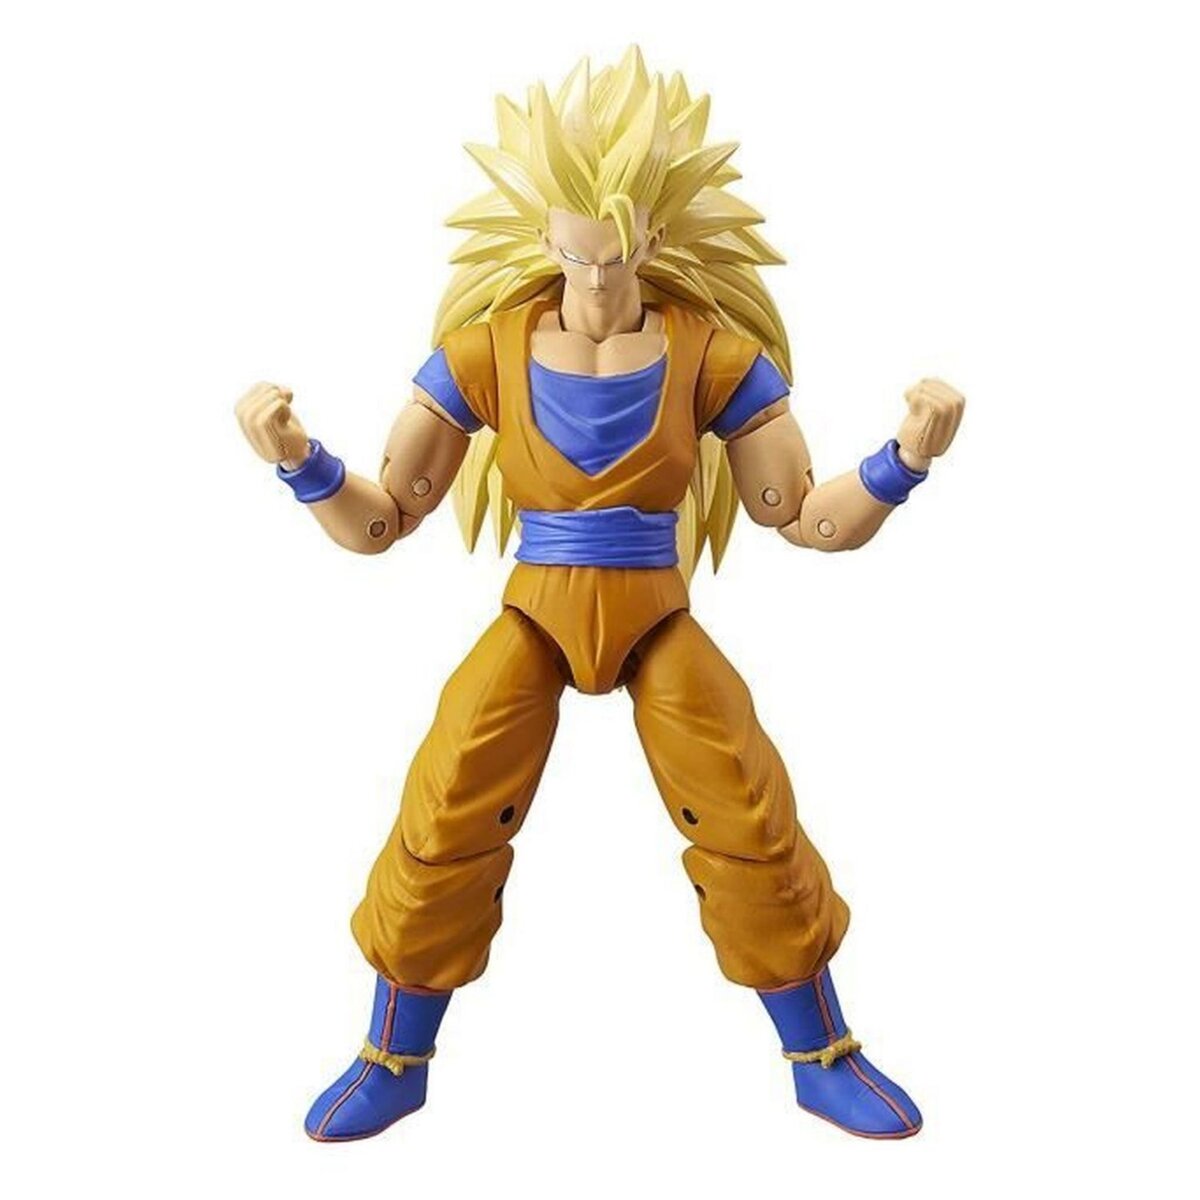 BANDAI Figurine Super Saiyan 3 Goku 17 cm - Dragon Ball Super